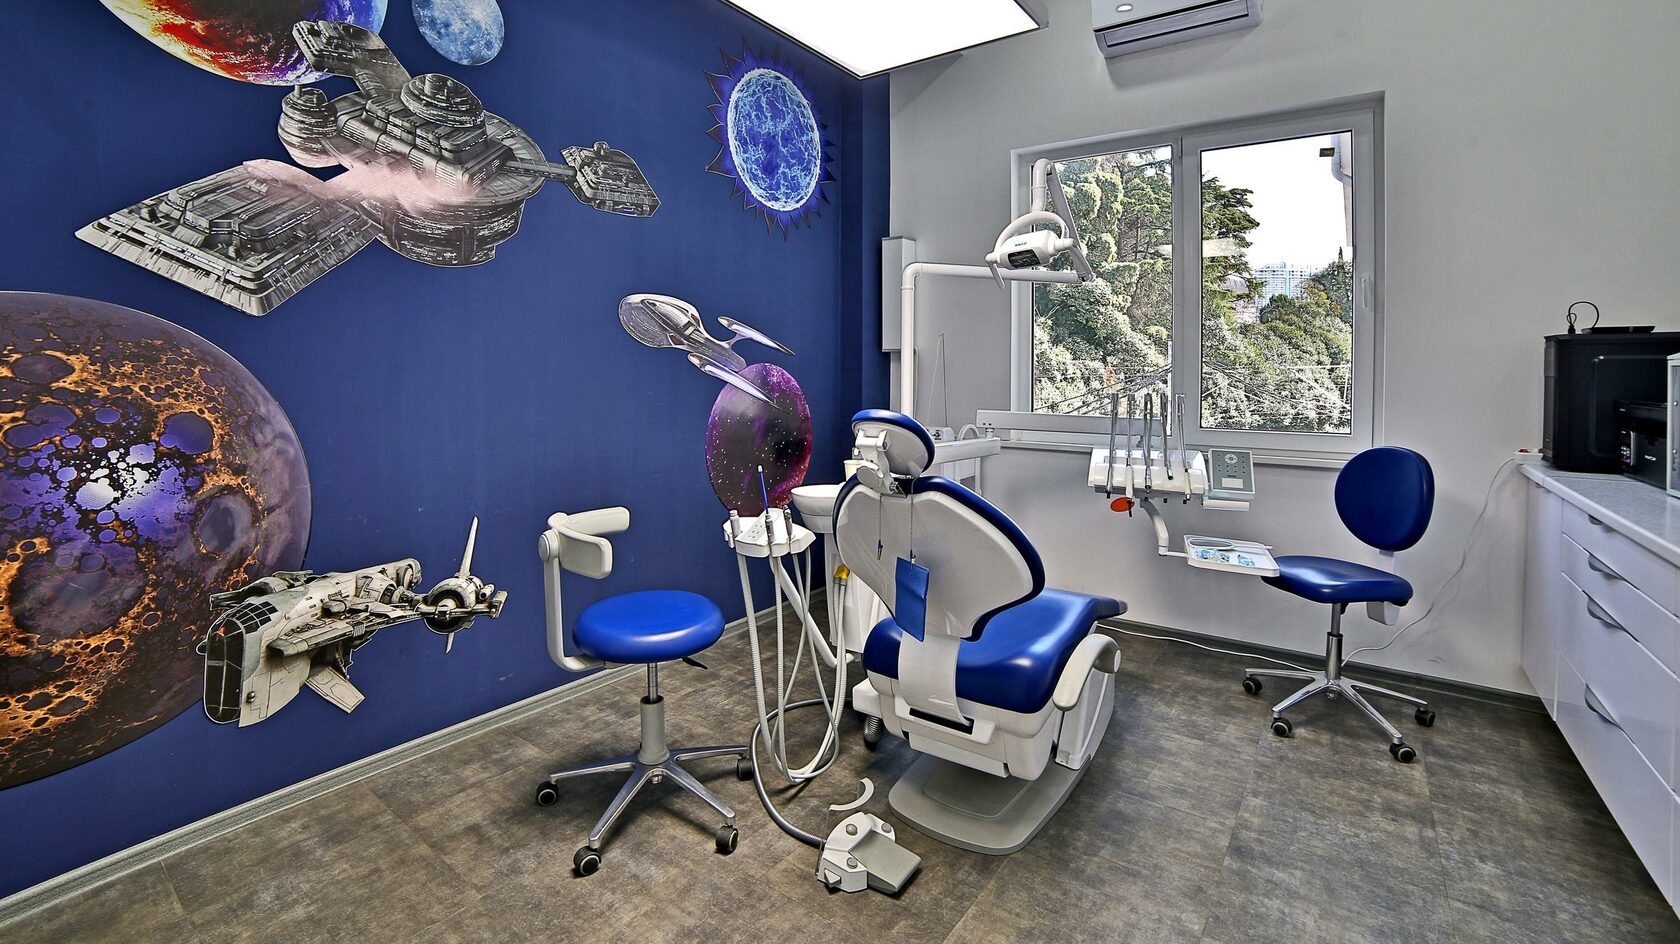 Dental Station 32 Сочи. Стоматологии ds32. Dental стоматология Адлер. Сочи стоматологическая клиника Меридиан. Стоматология гермес